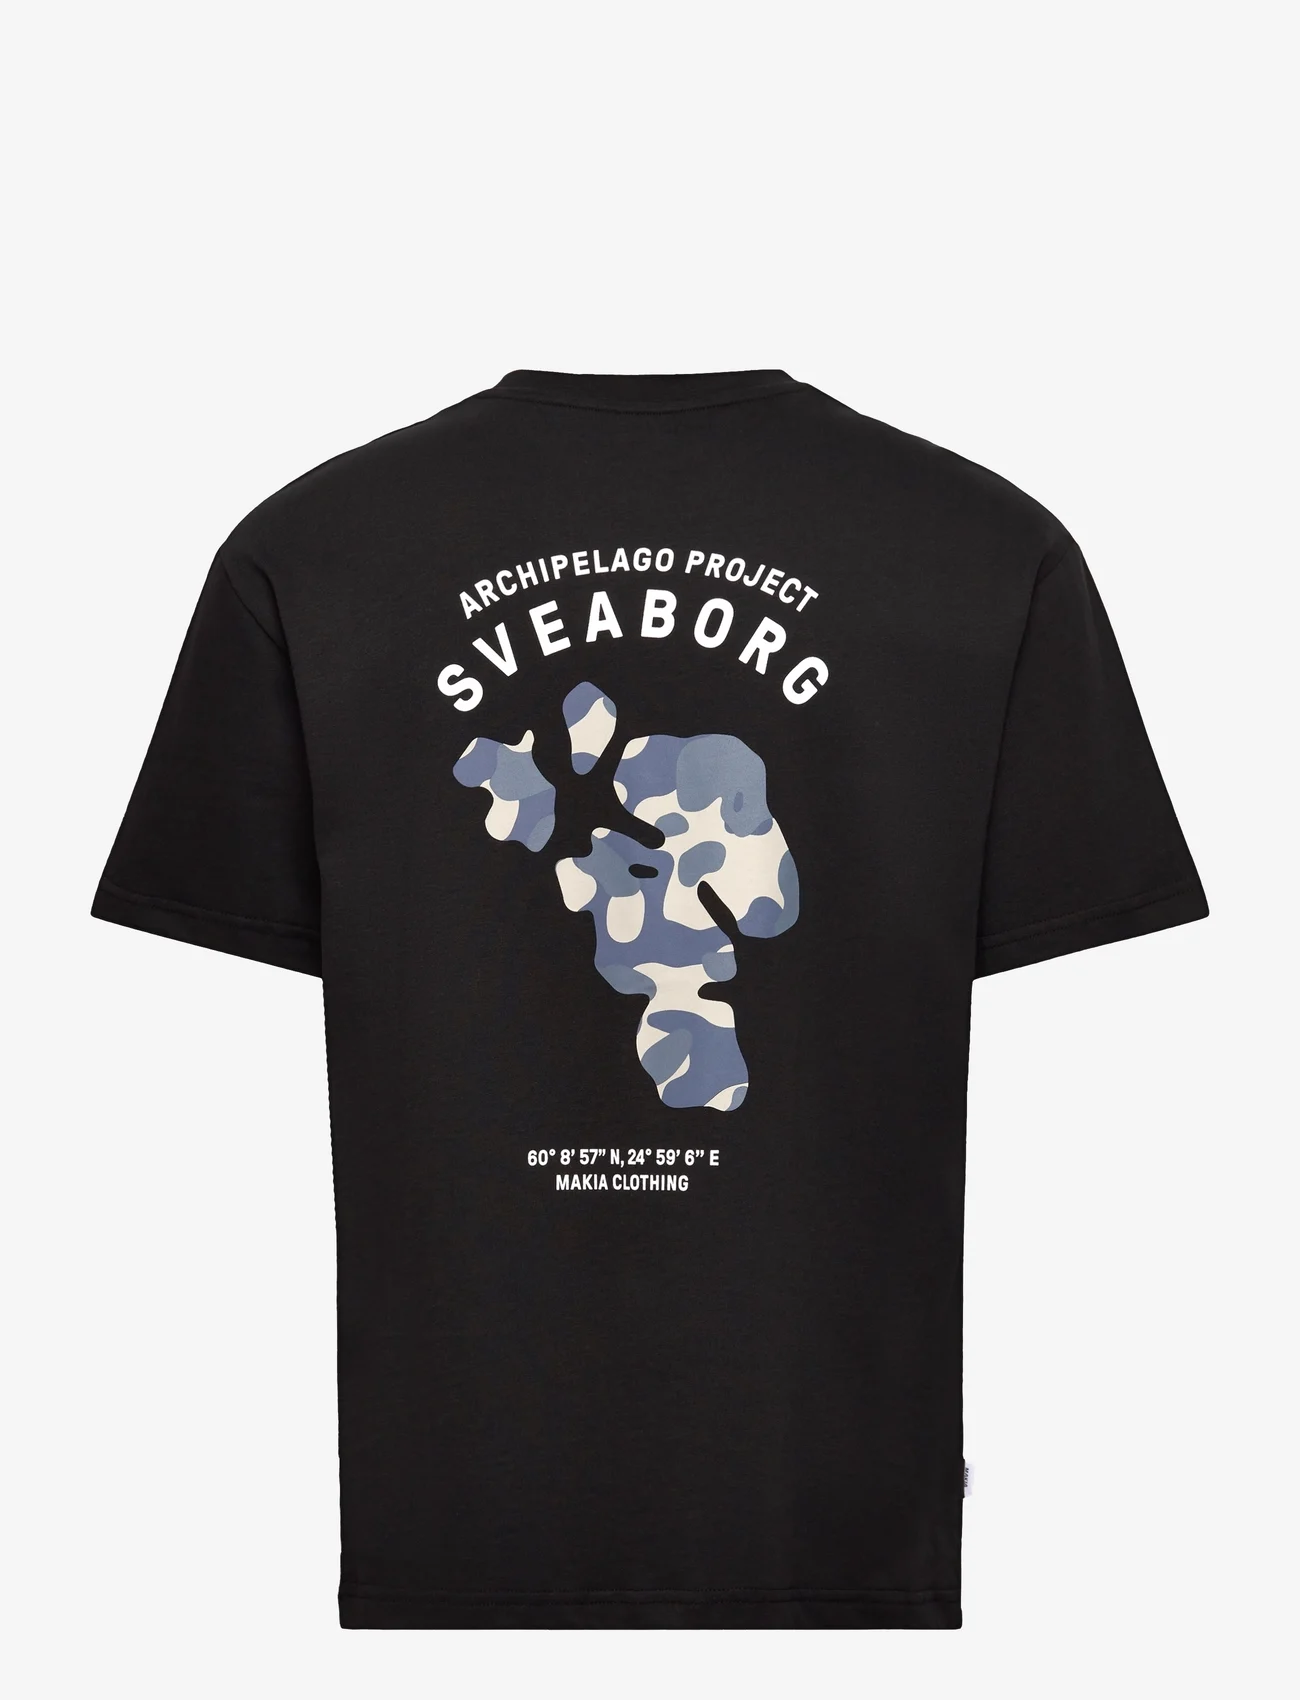 Makia - Sveaborg T-shirt - kortärmade t-shirts - black - 1